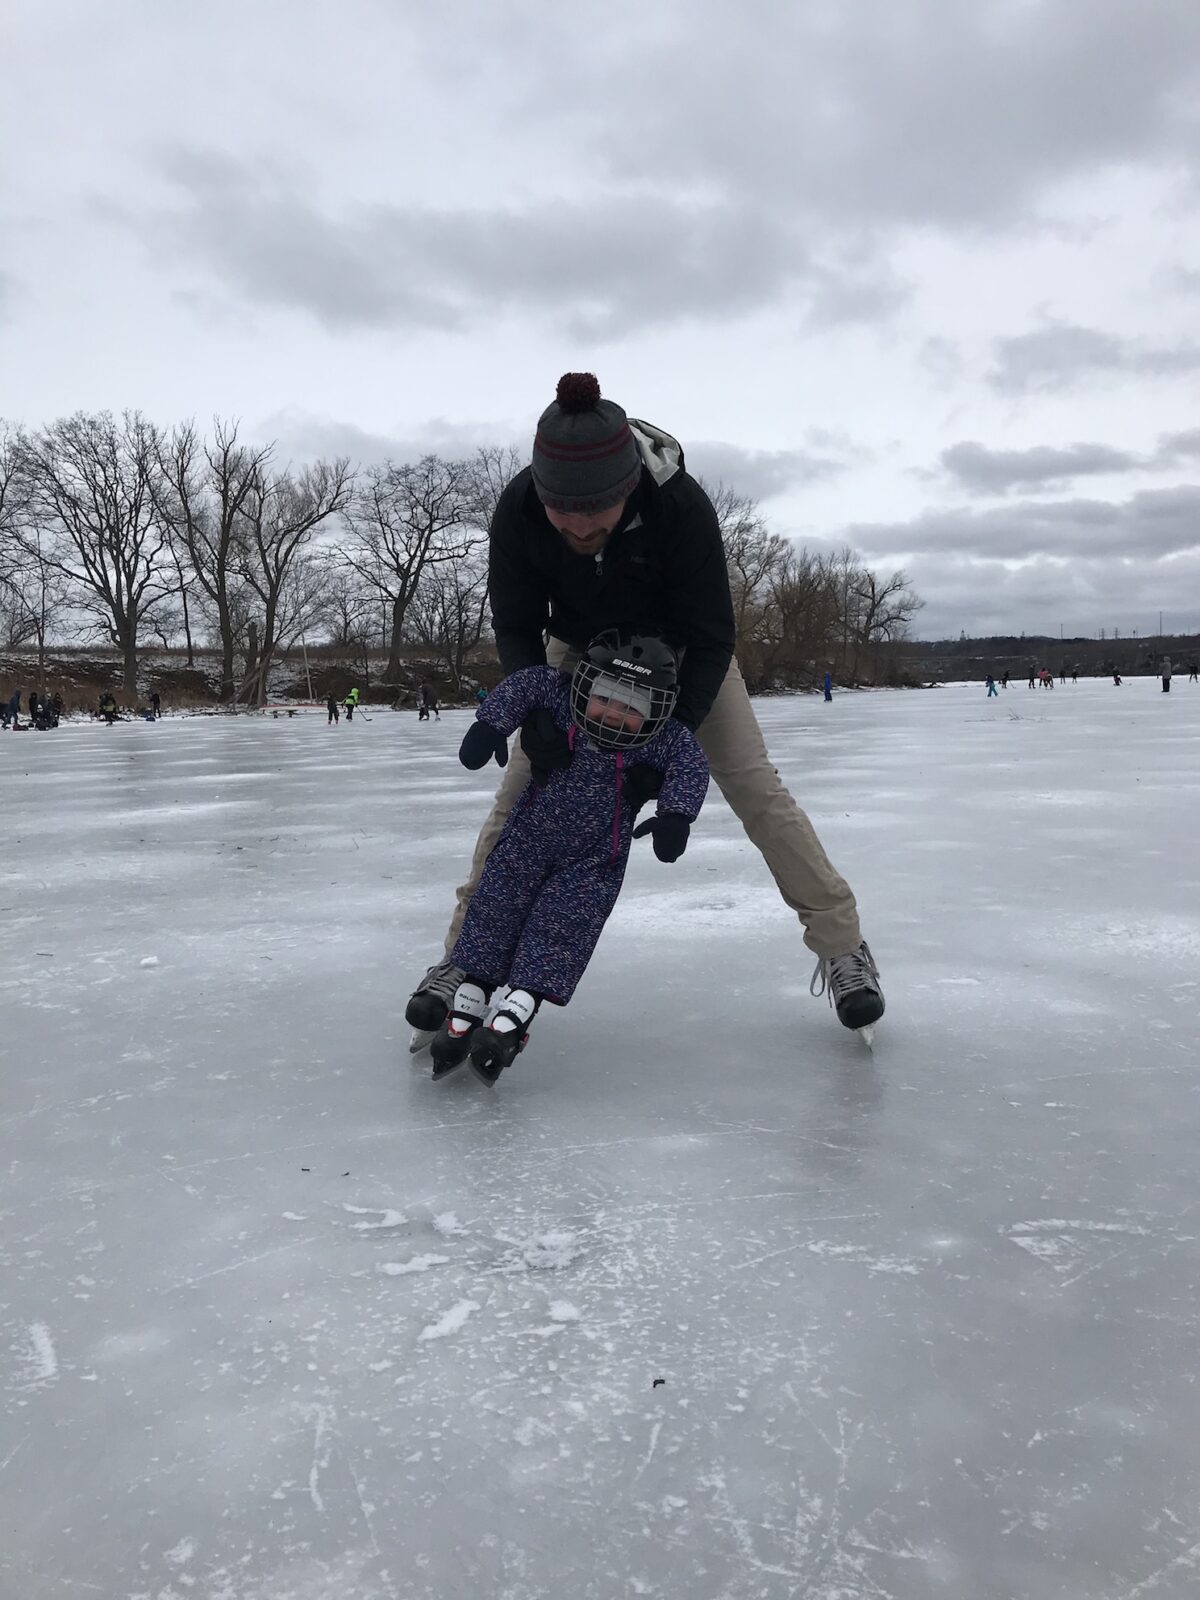 Hamilton’s outdoor winter recreation activities kick off